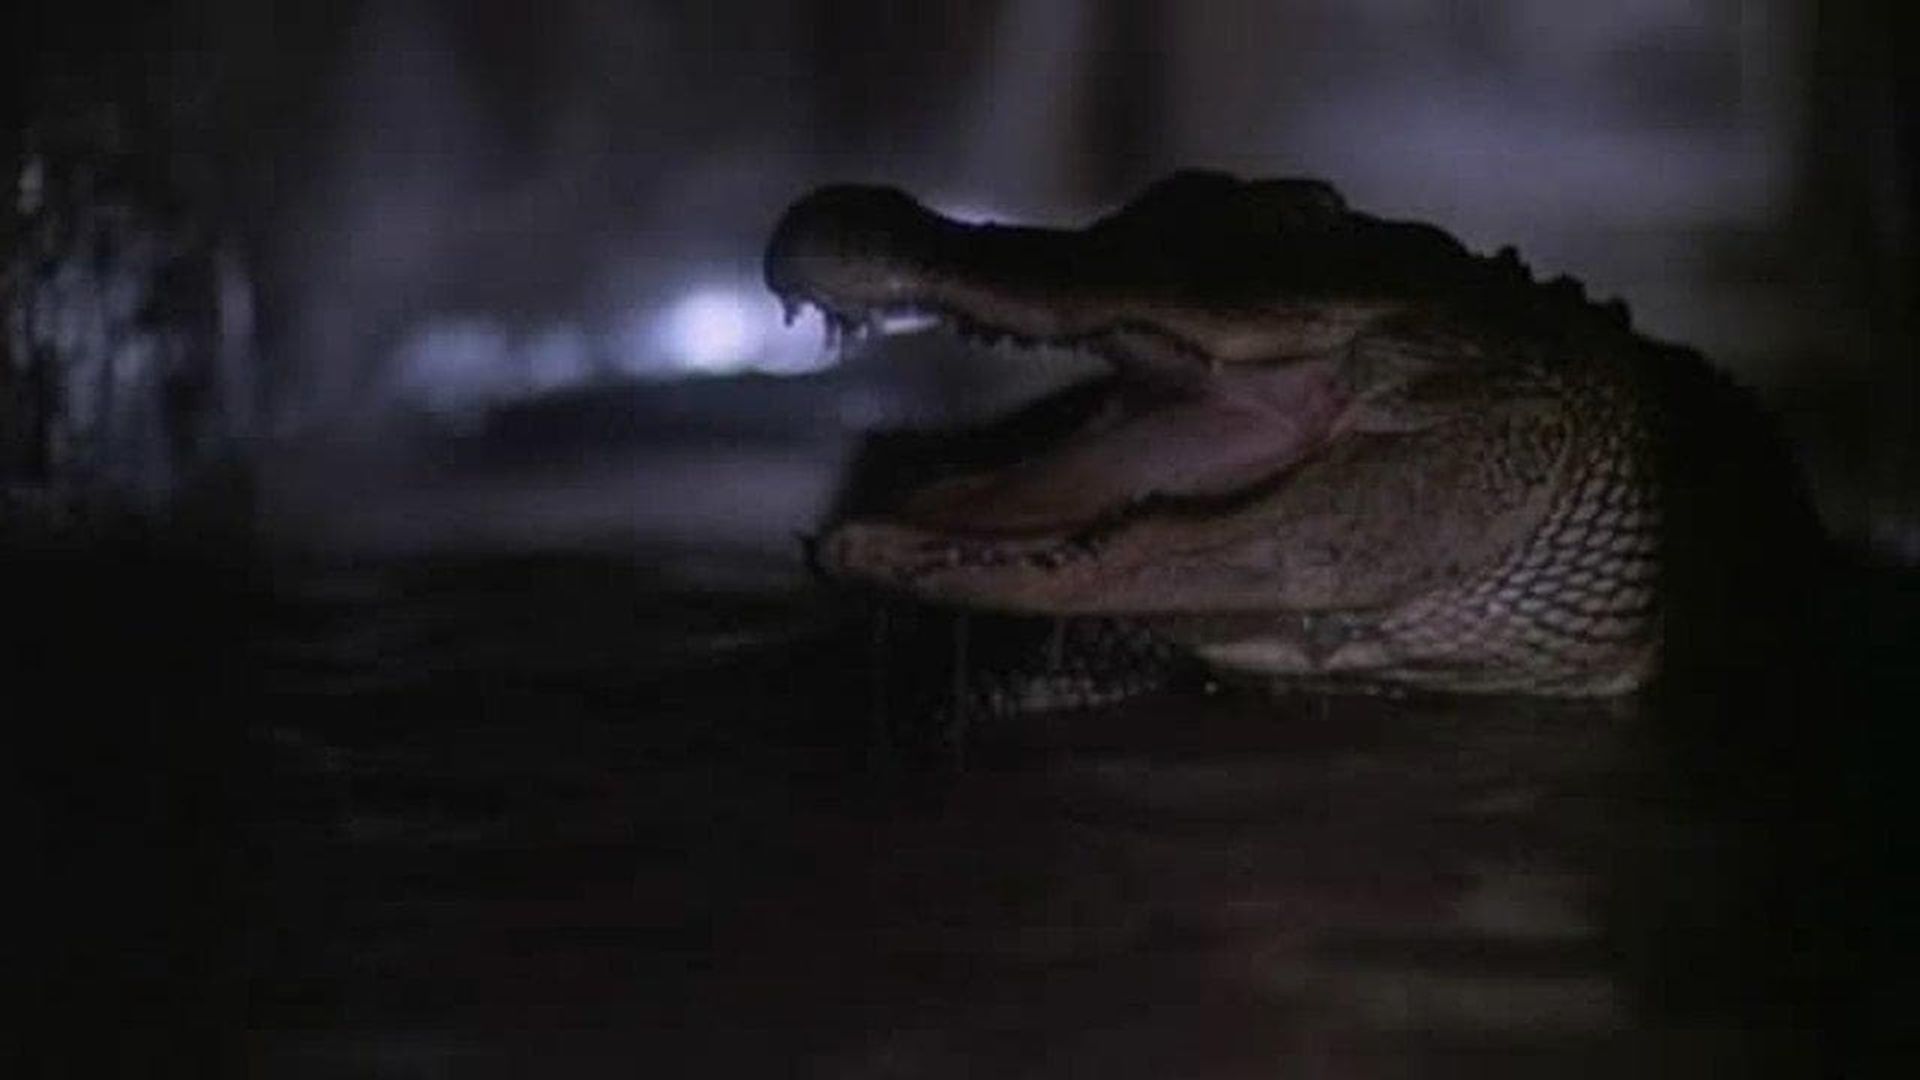 Alligator II: The Mutation background